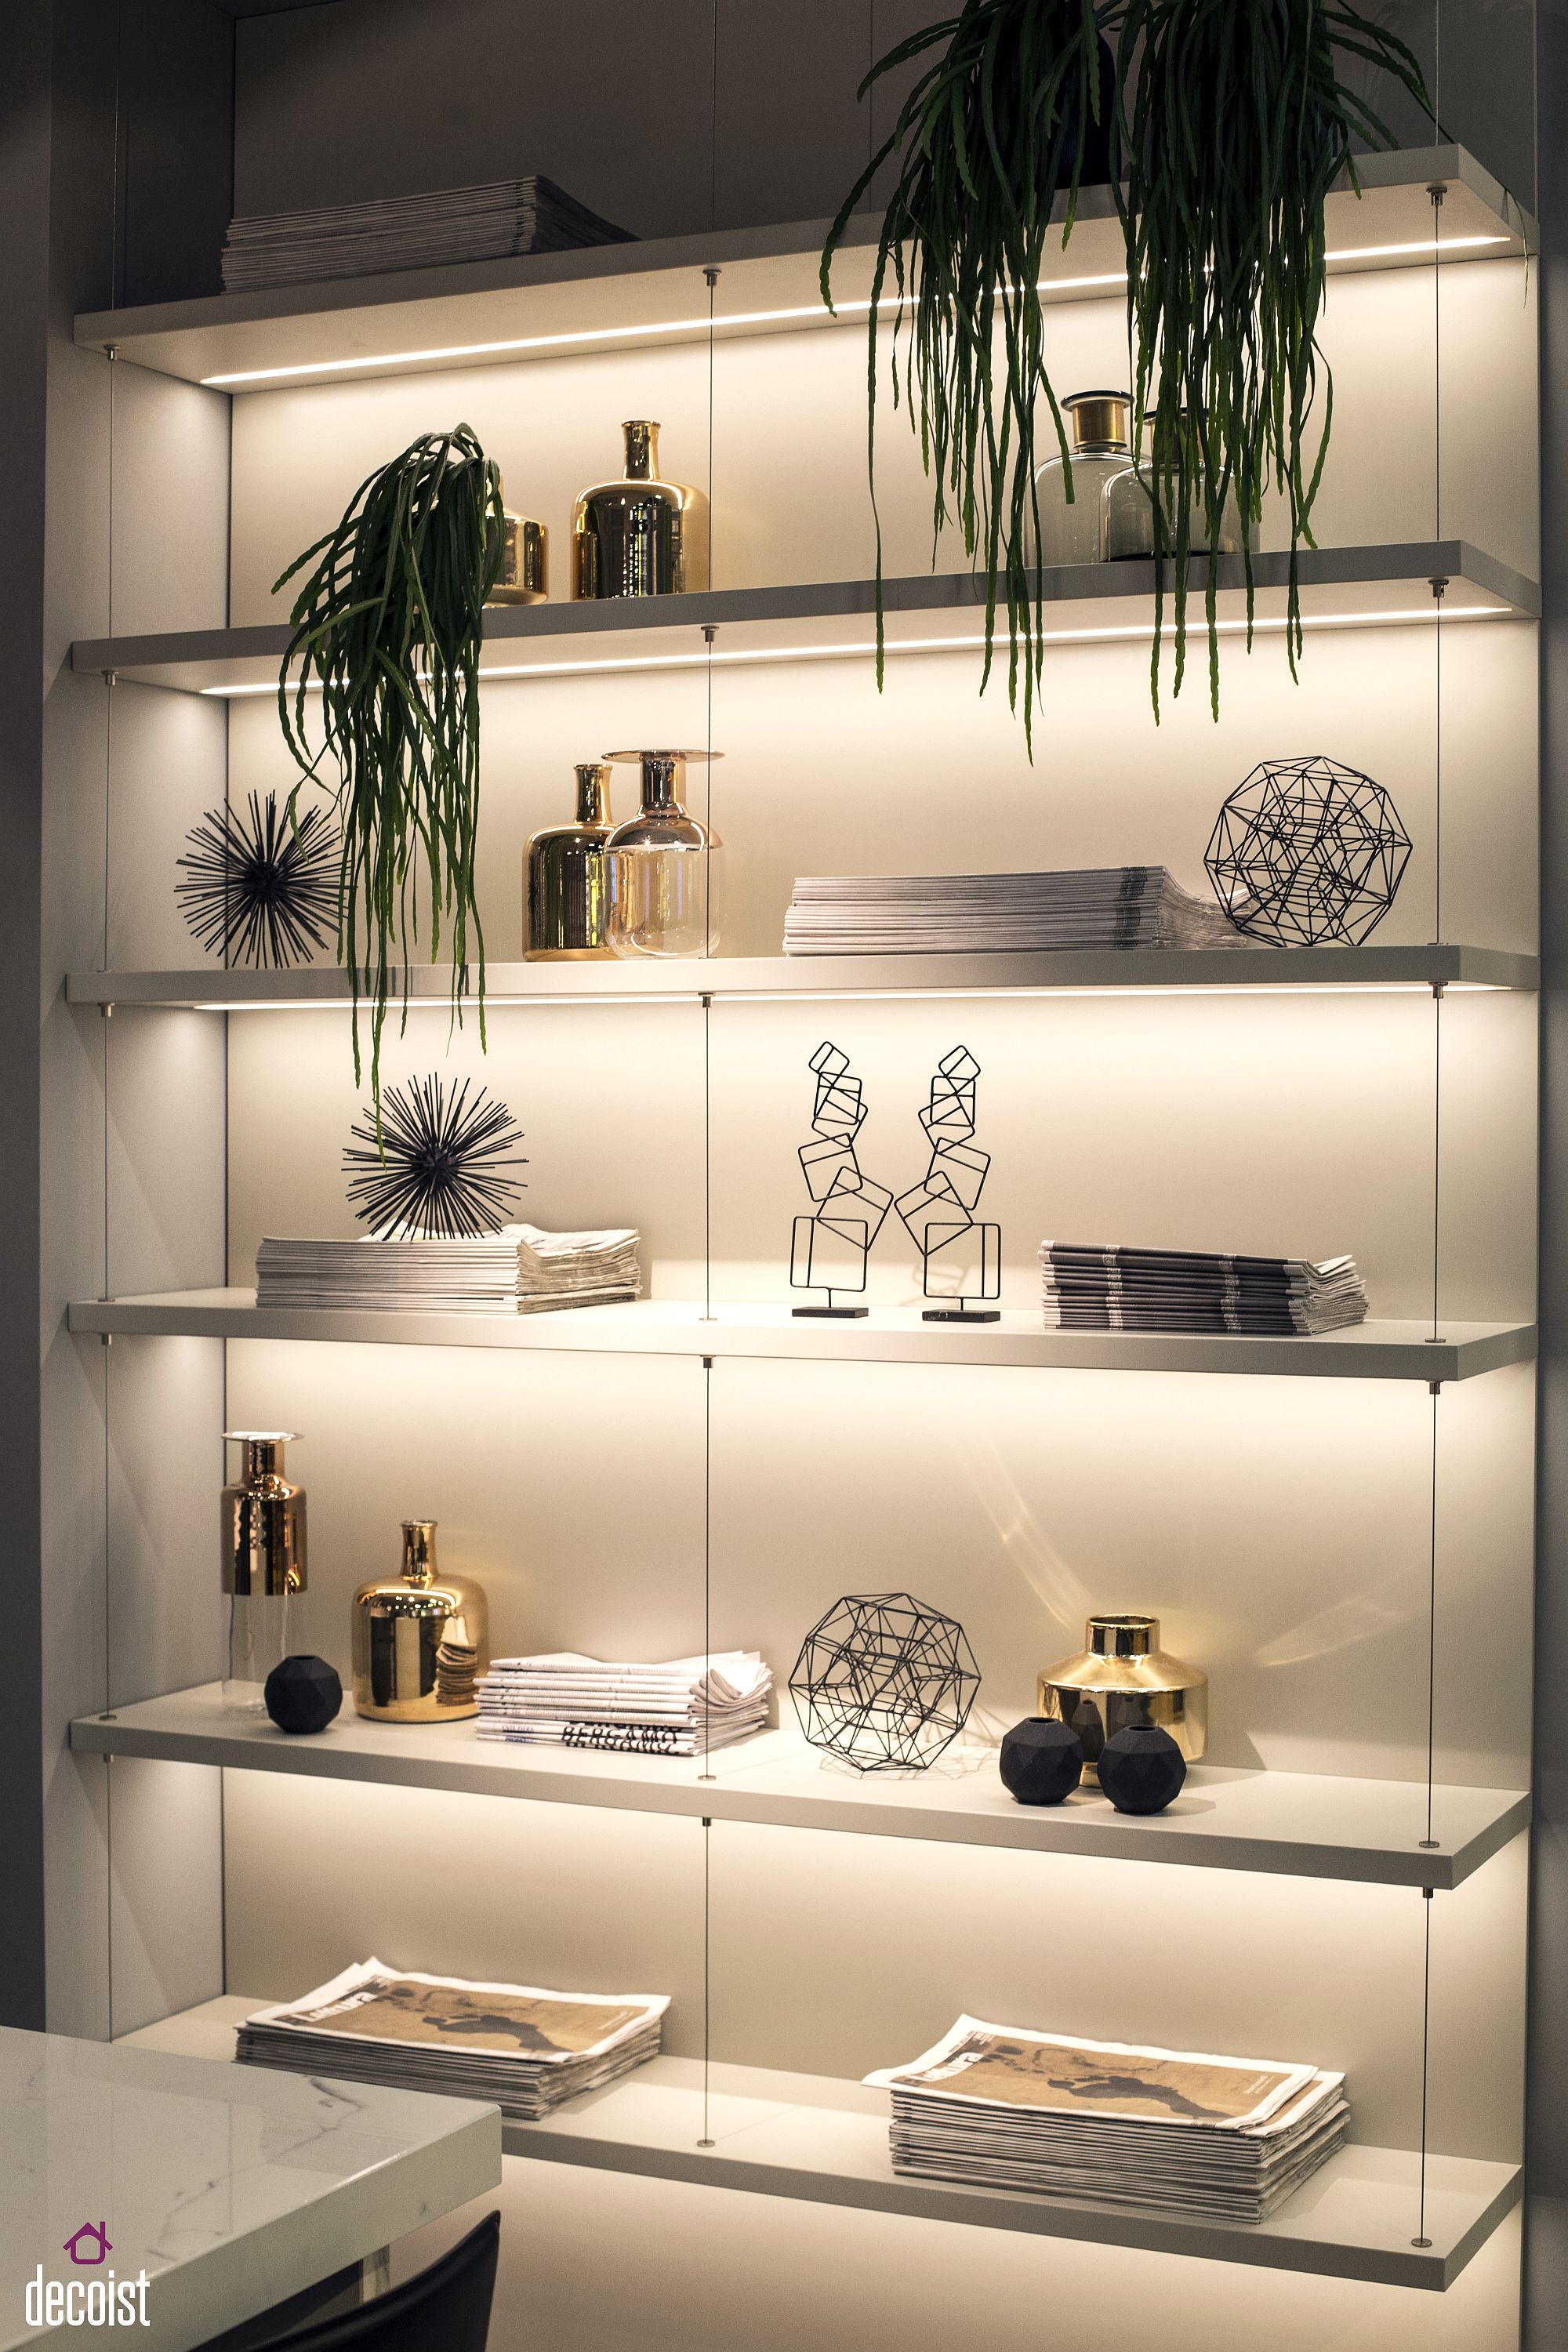 LED strip lights make for great accent lighting to highlight kitchen shelves